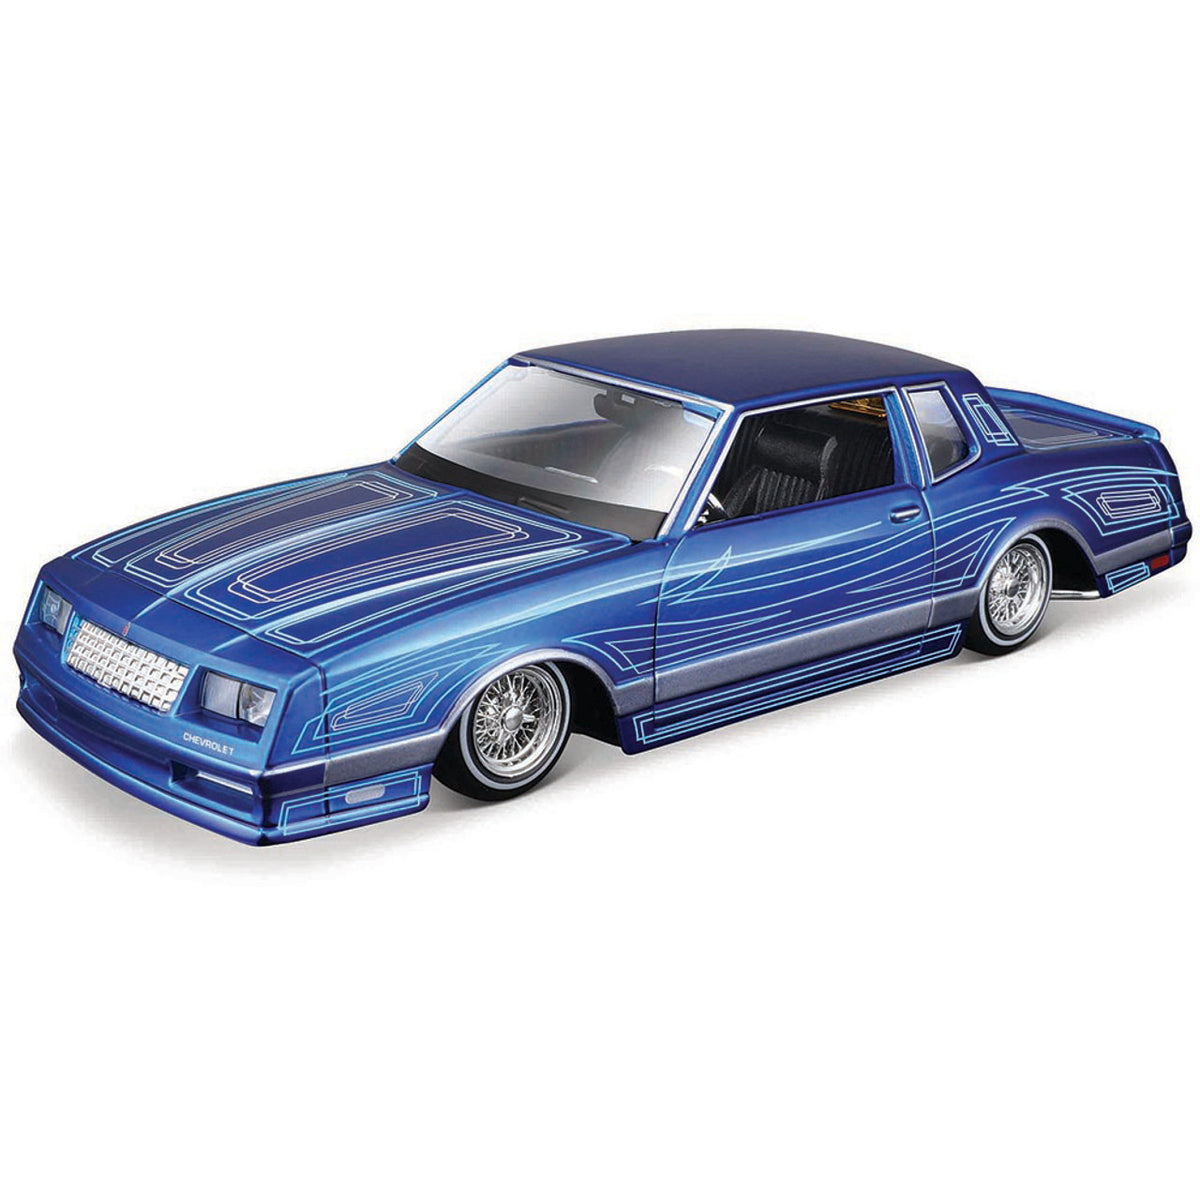 1986 Chevrolet Monte Carlo Blue Silver "Lowriders Collection "1/24 MAISTO 32542